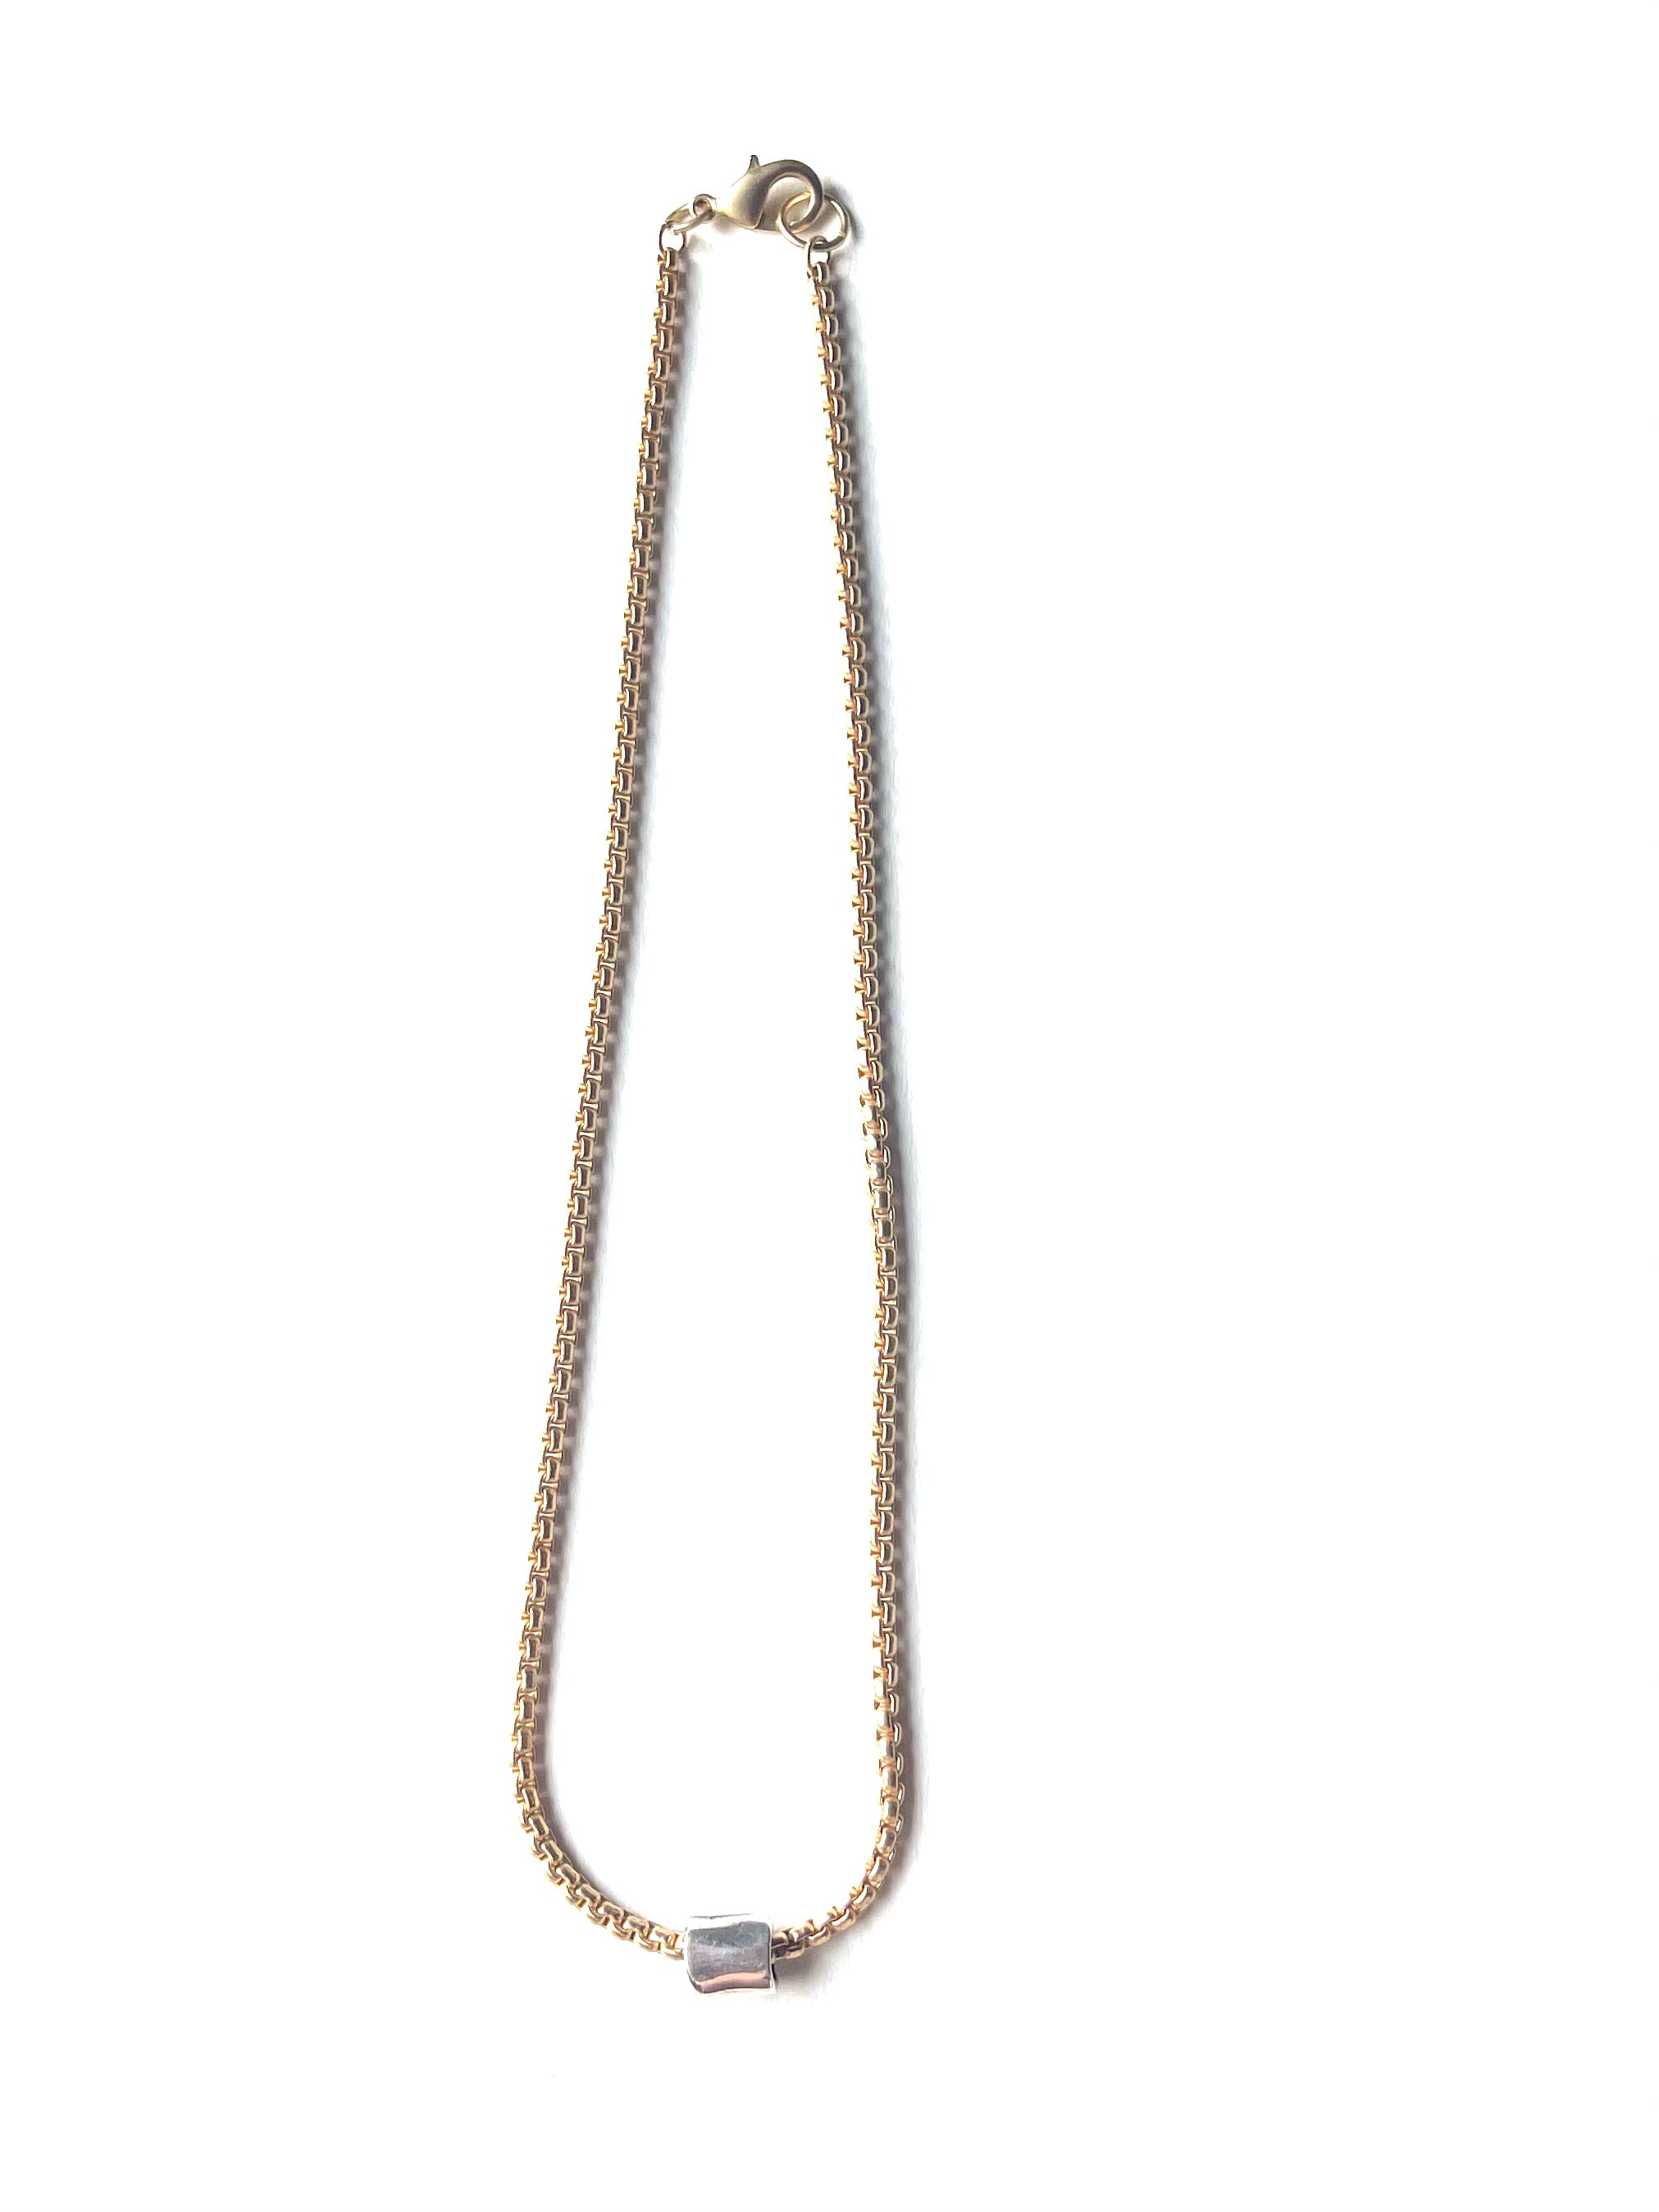 Barrel - necklace with hammered barrel